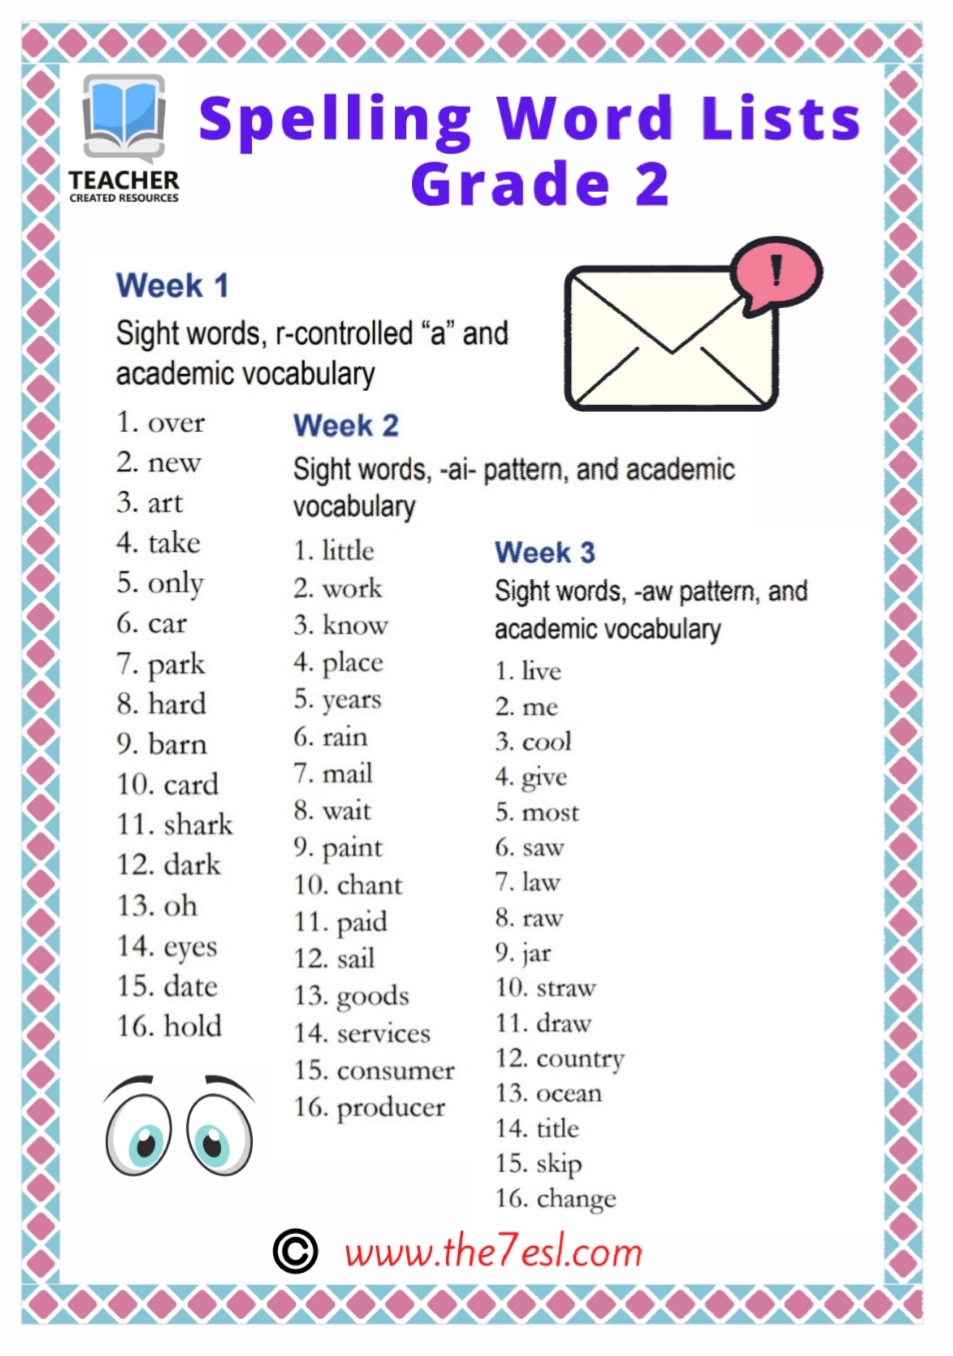 english-worksheets-make-a-spelling-word-search-gambaran